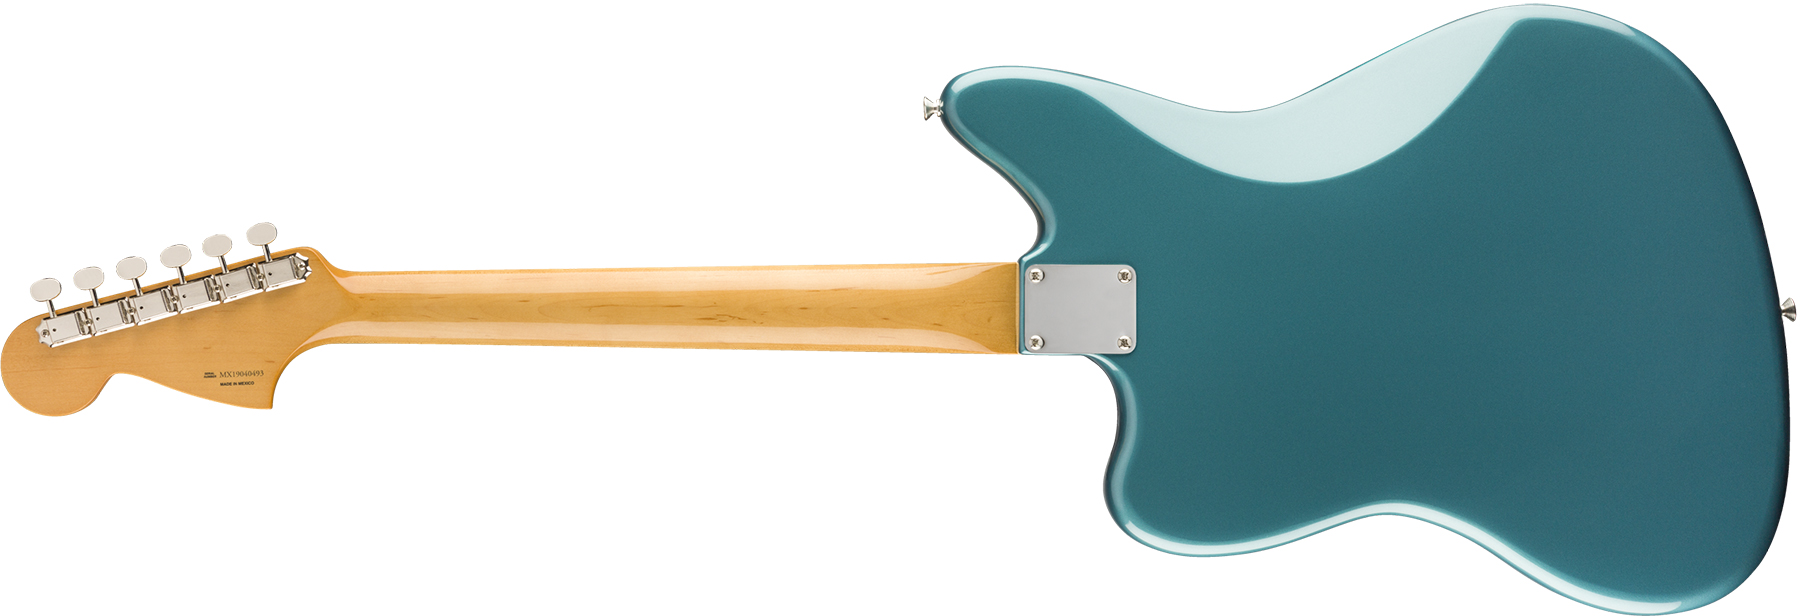 Fender Jaguar 60s Vintera Vintage Mex Pf - Ocean Turquoise - Retro rock electric guitar - Variation 1